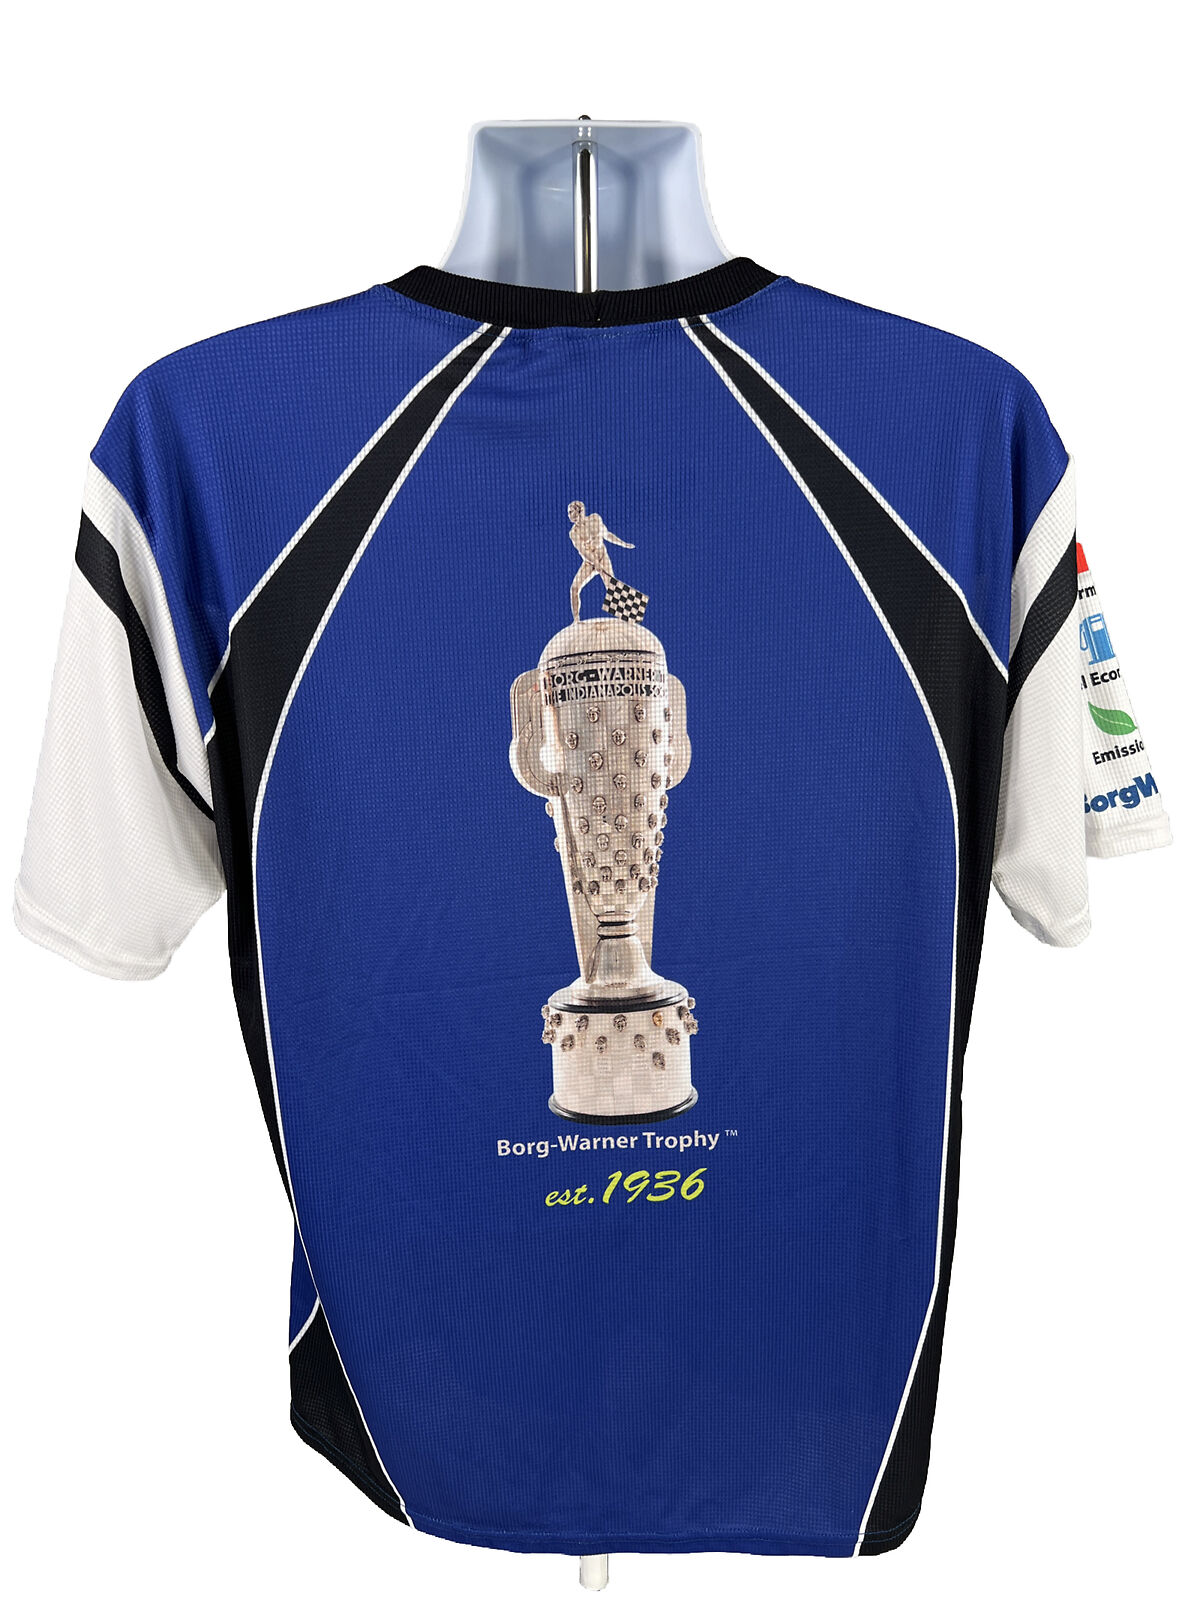 Dyesport Men's Borgwarner Racing Jersey Shirt - M